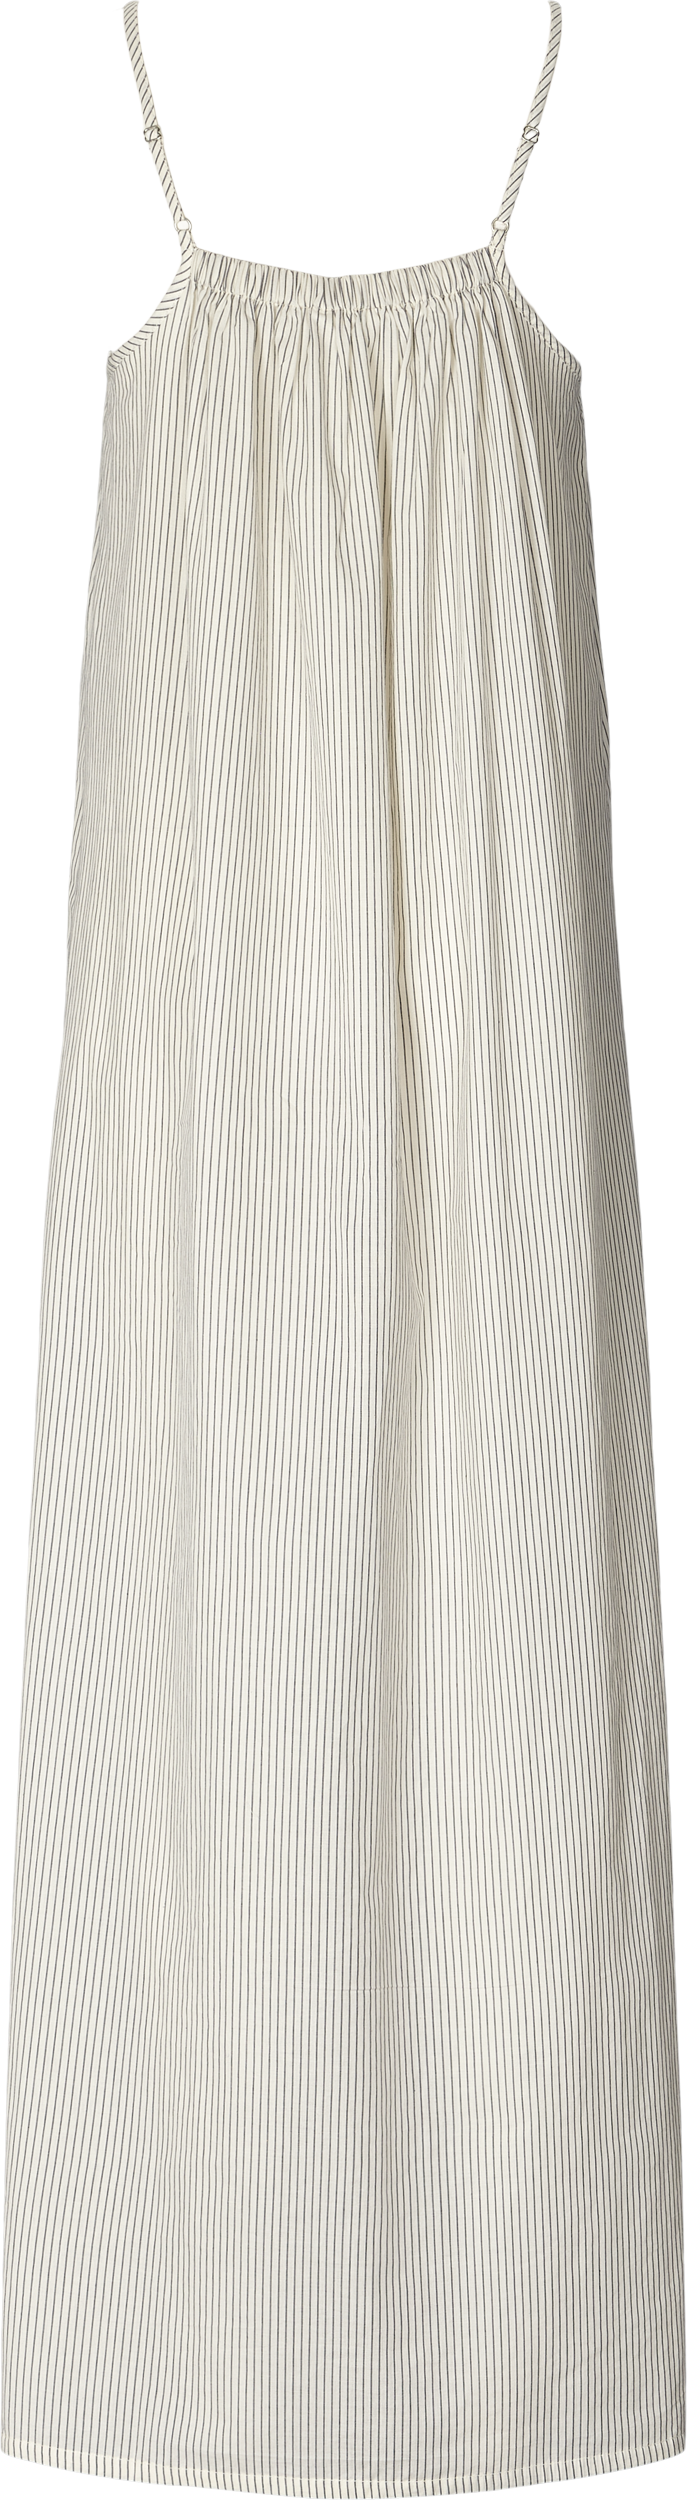 GAI+LISVA Julia Dress Cotton Stripe Dresses & Skirts 470 Denim Blue Stripe